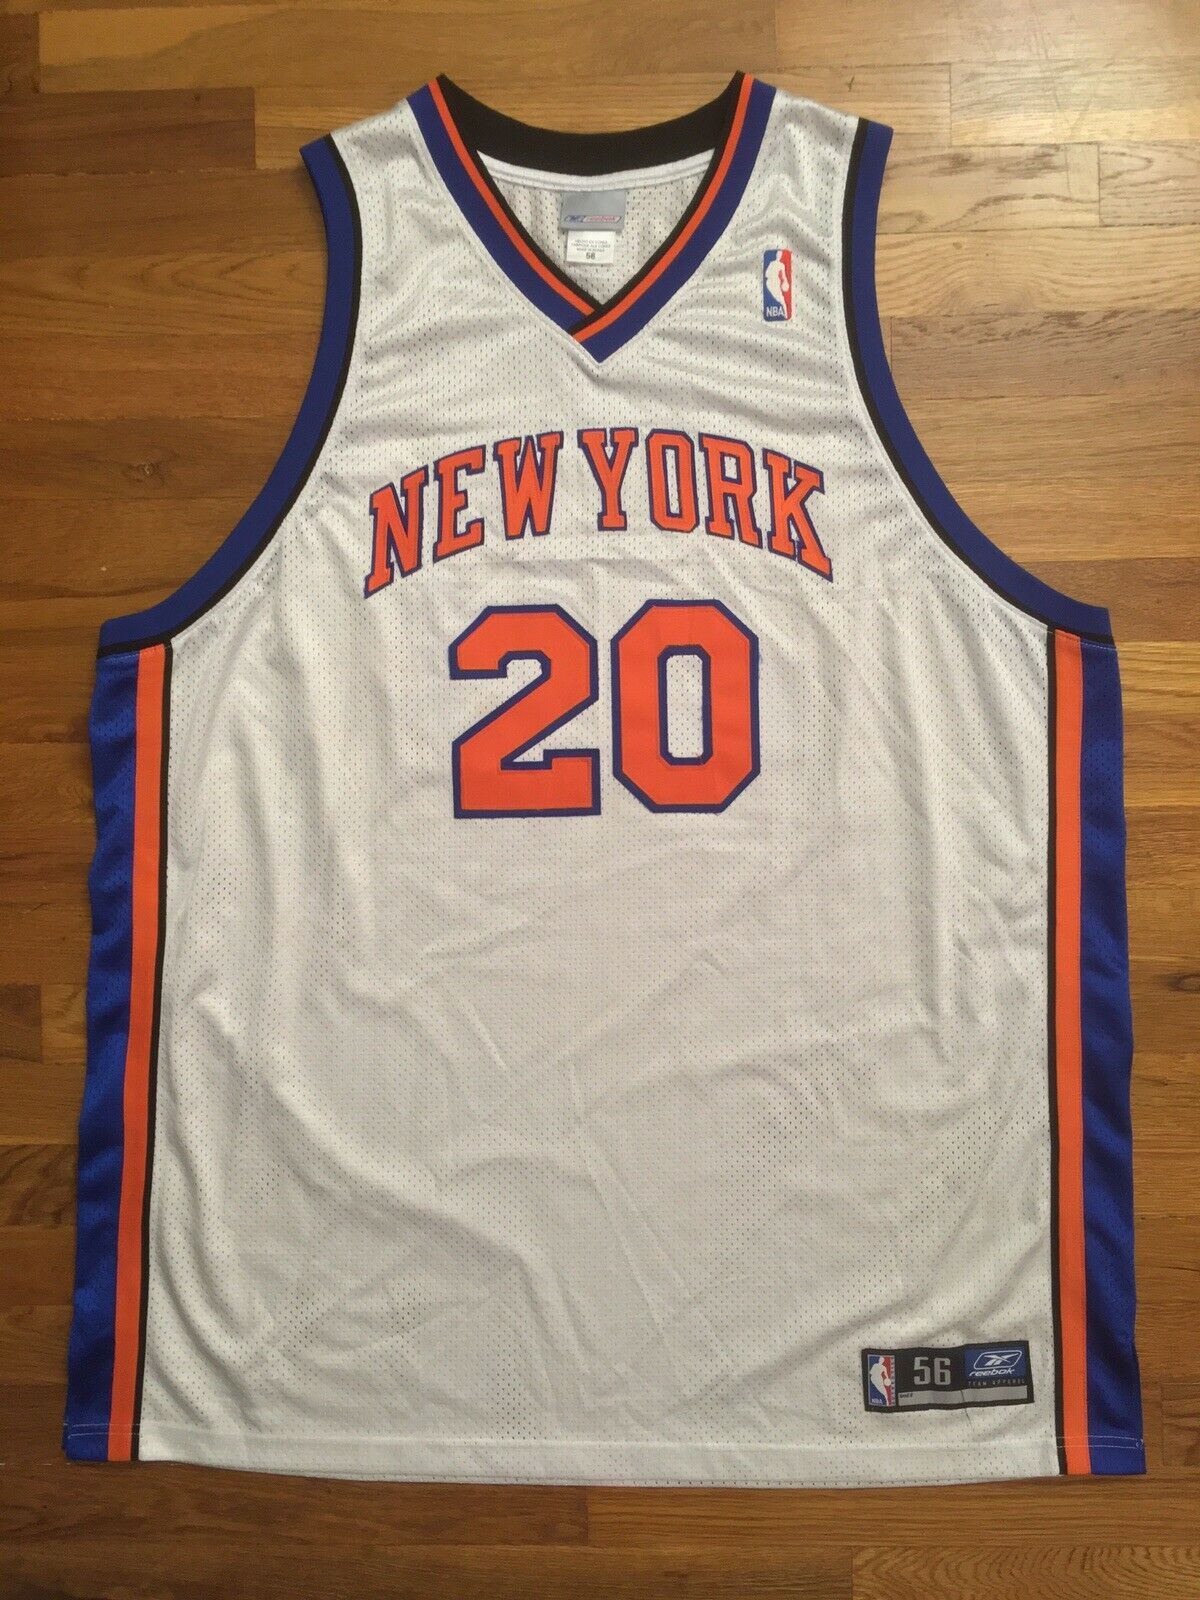 Authentic 2003 Reebok New York Knicks NYK Allan Houston Home White Jersey 56 - $309.99